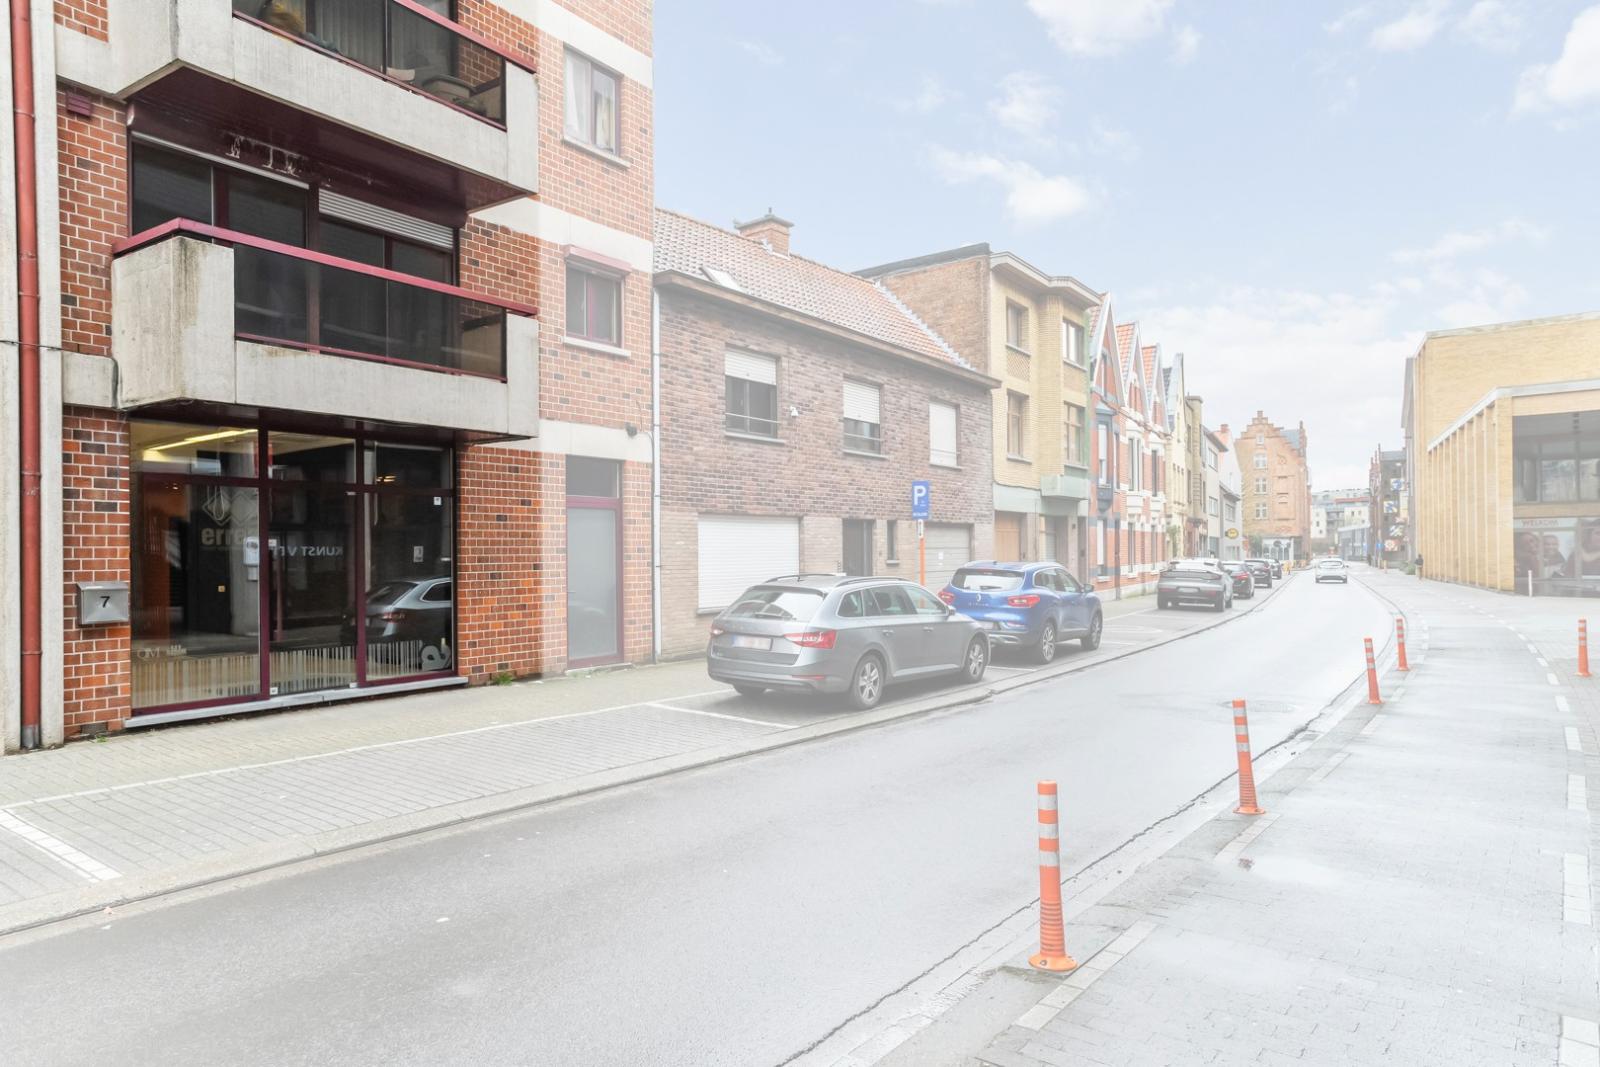 Handelspand met parkeermogelijkheid op topligging te centrum Roeselare!